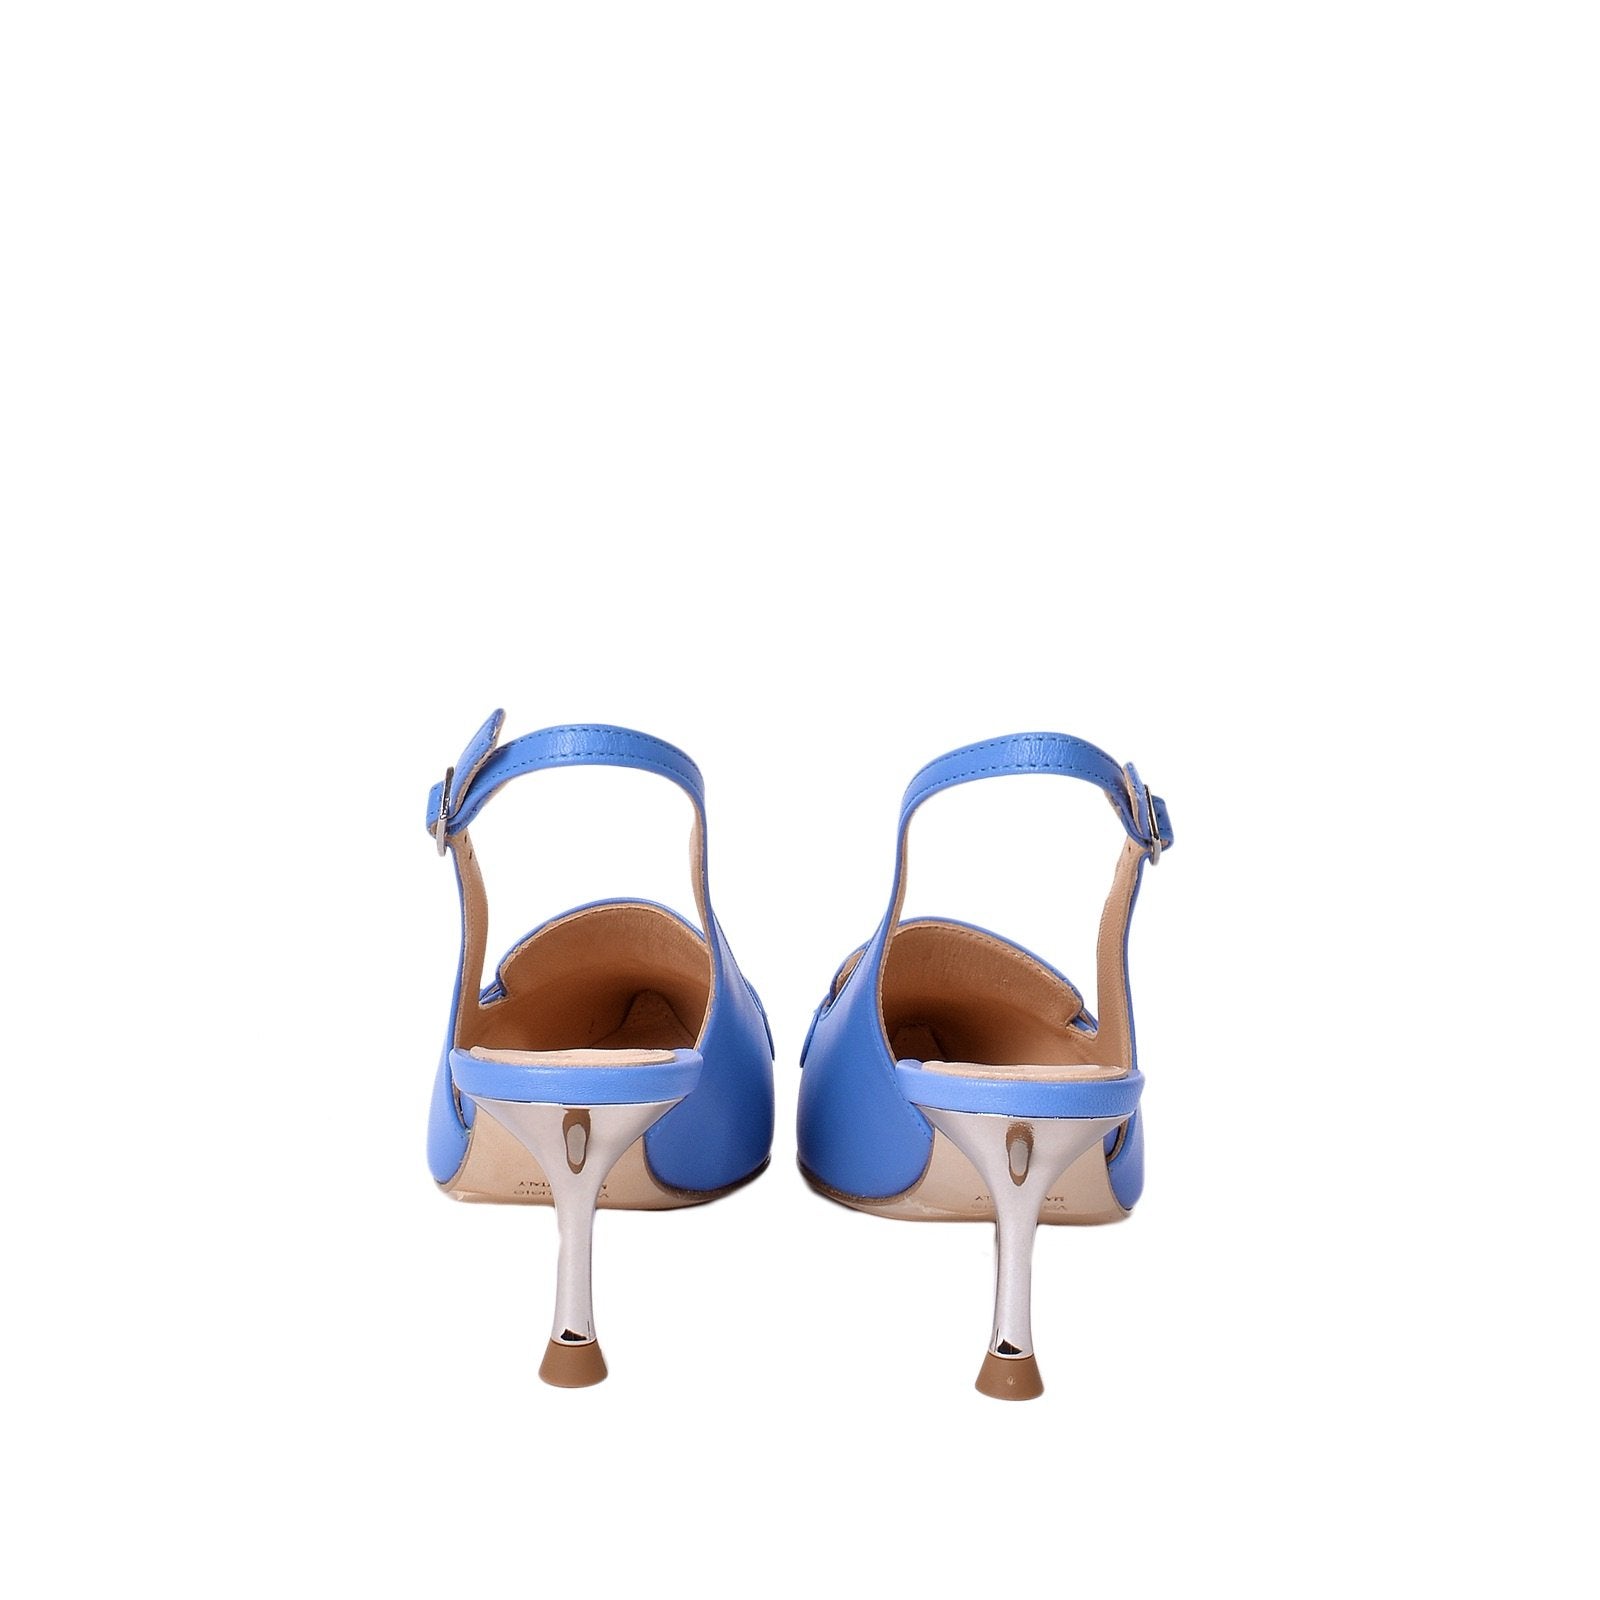 Chiffon Sling Back Shoes In Light Blue Heels 1002/Blue - 4